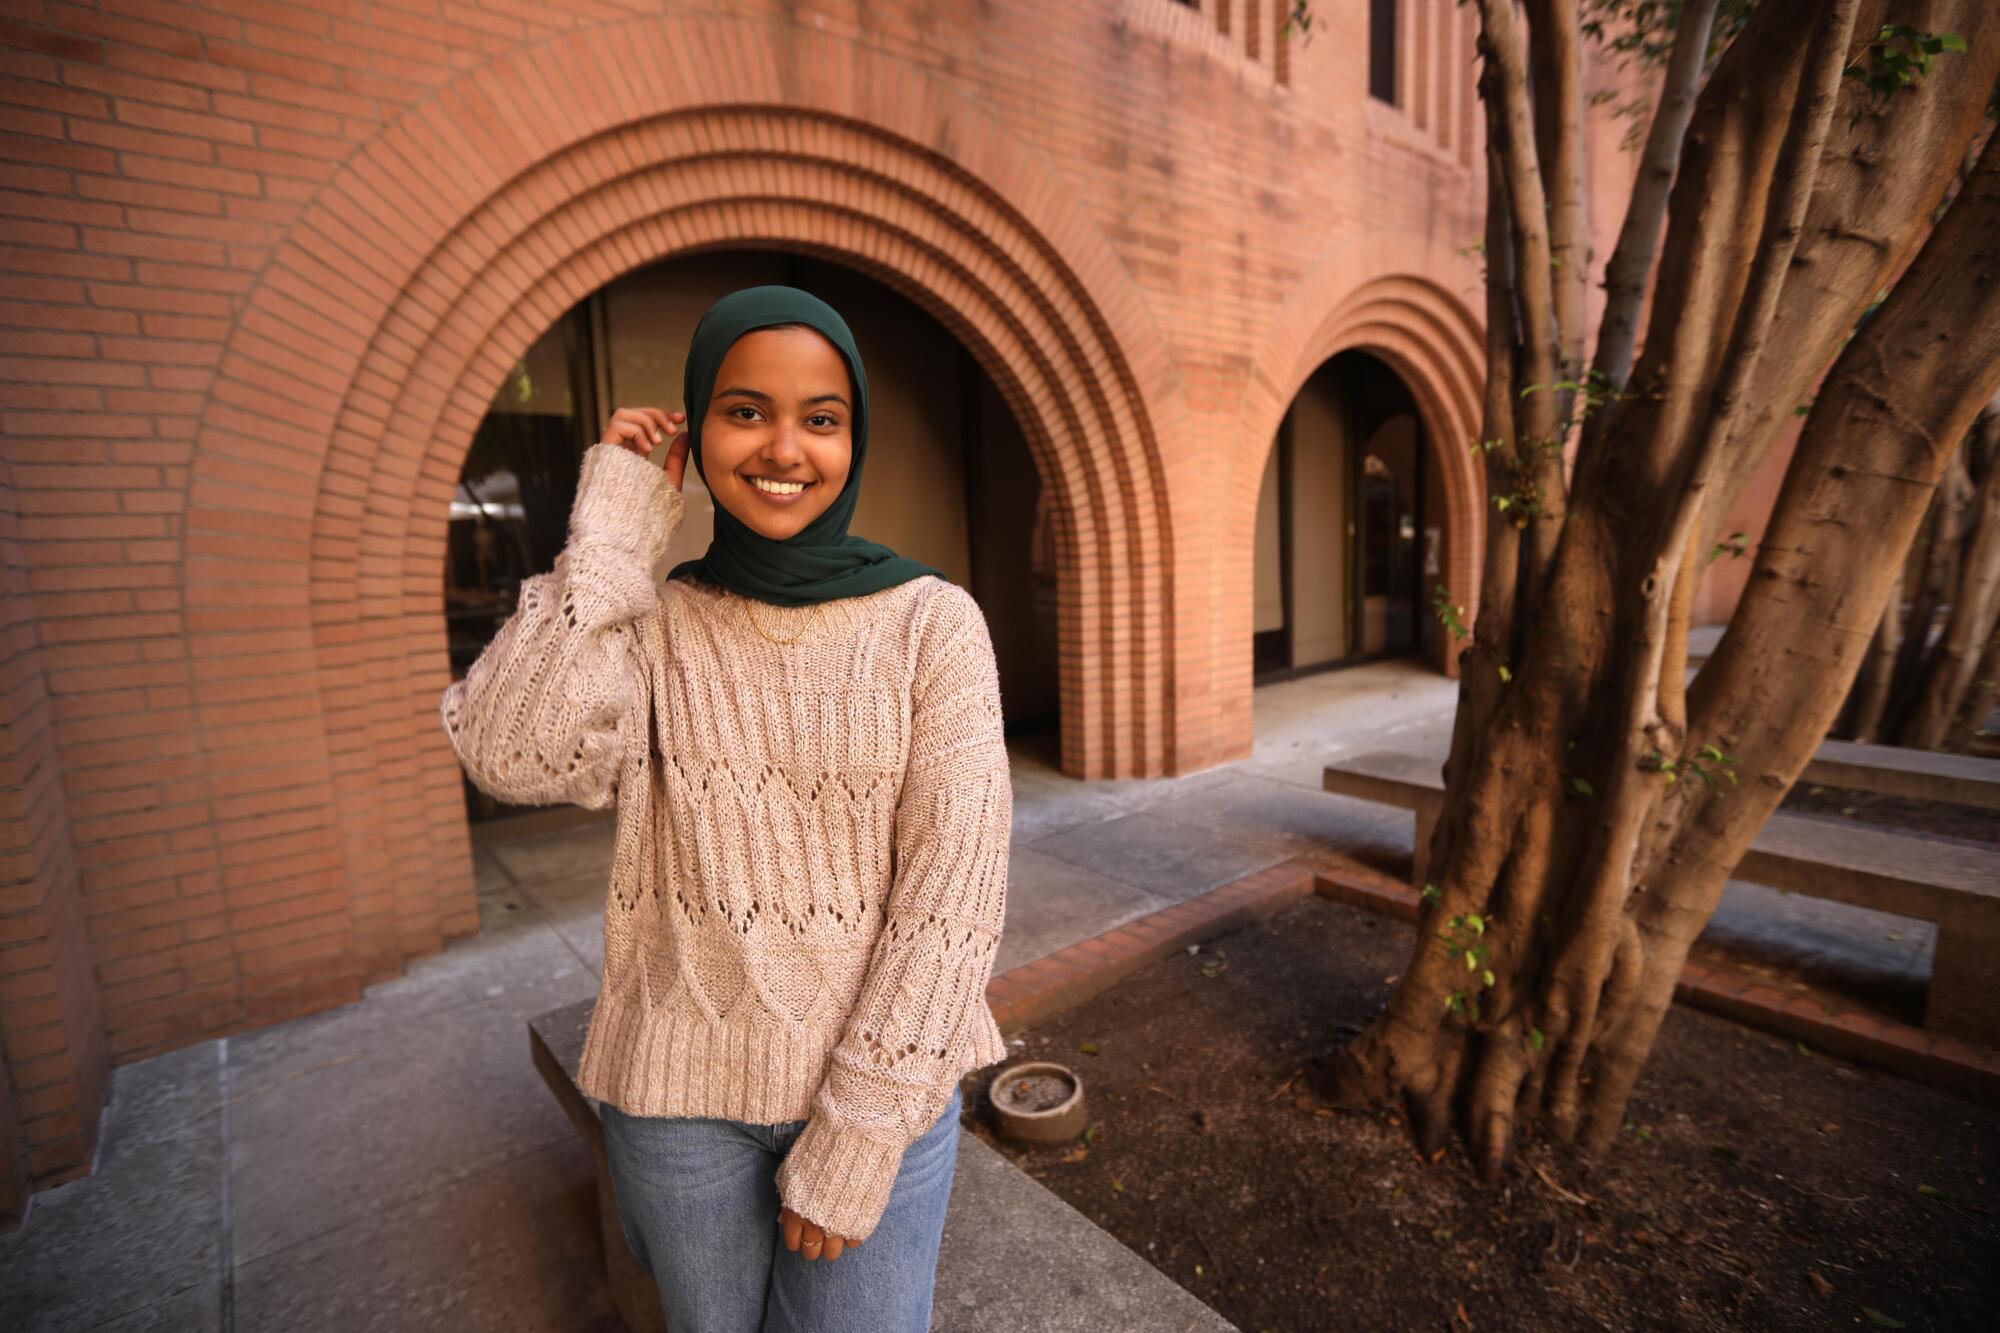 Asna Tabassum, a graduating senior at USC, was selected as 